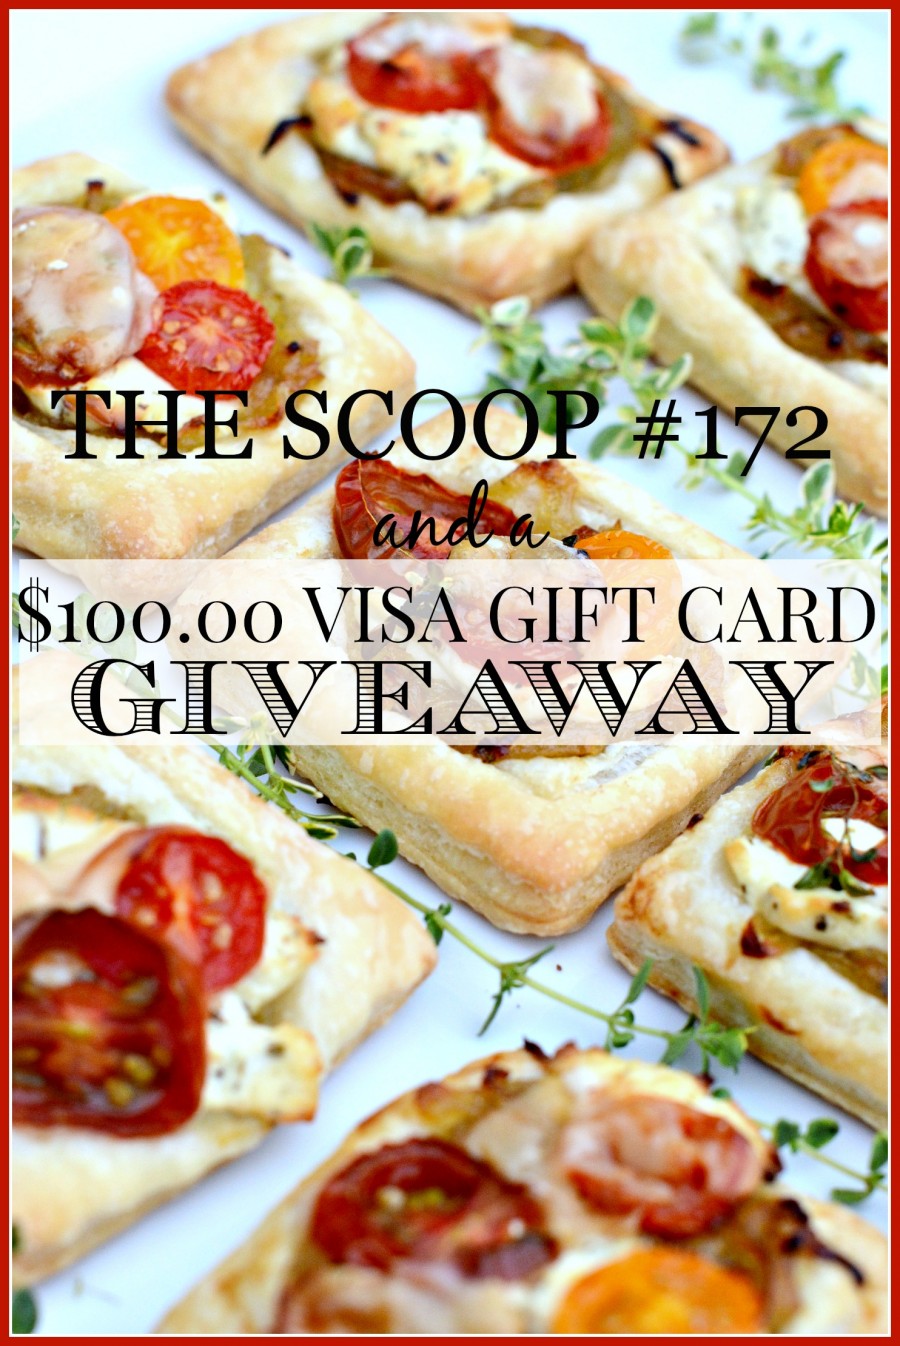 THE SCOOP #172- ENTER TO WIN $100.00 VISA GIFT CARD-stonegableblog.com